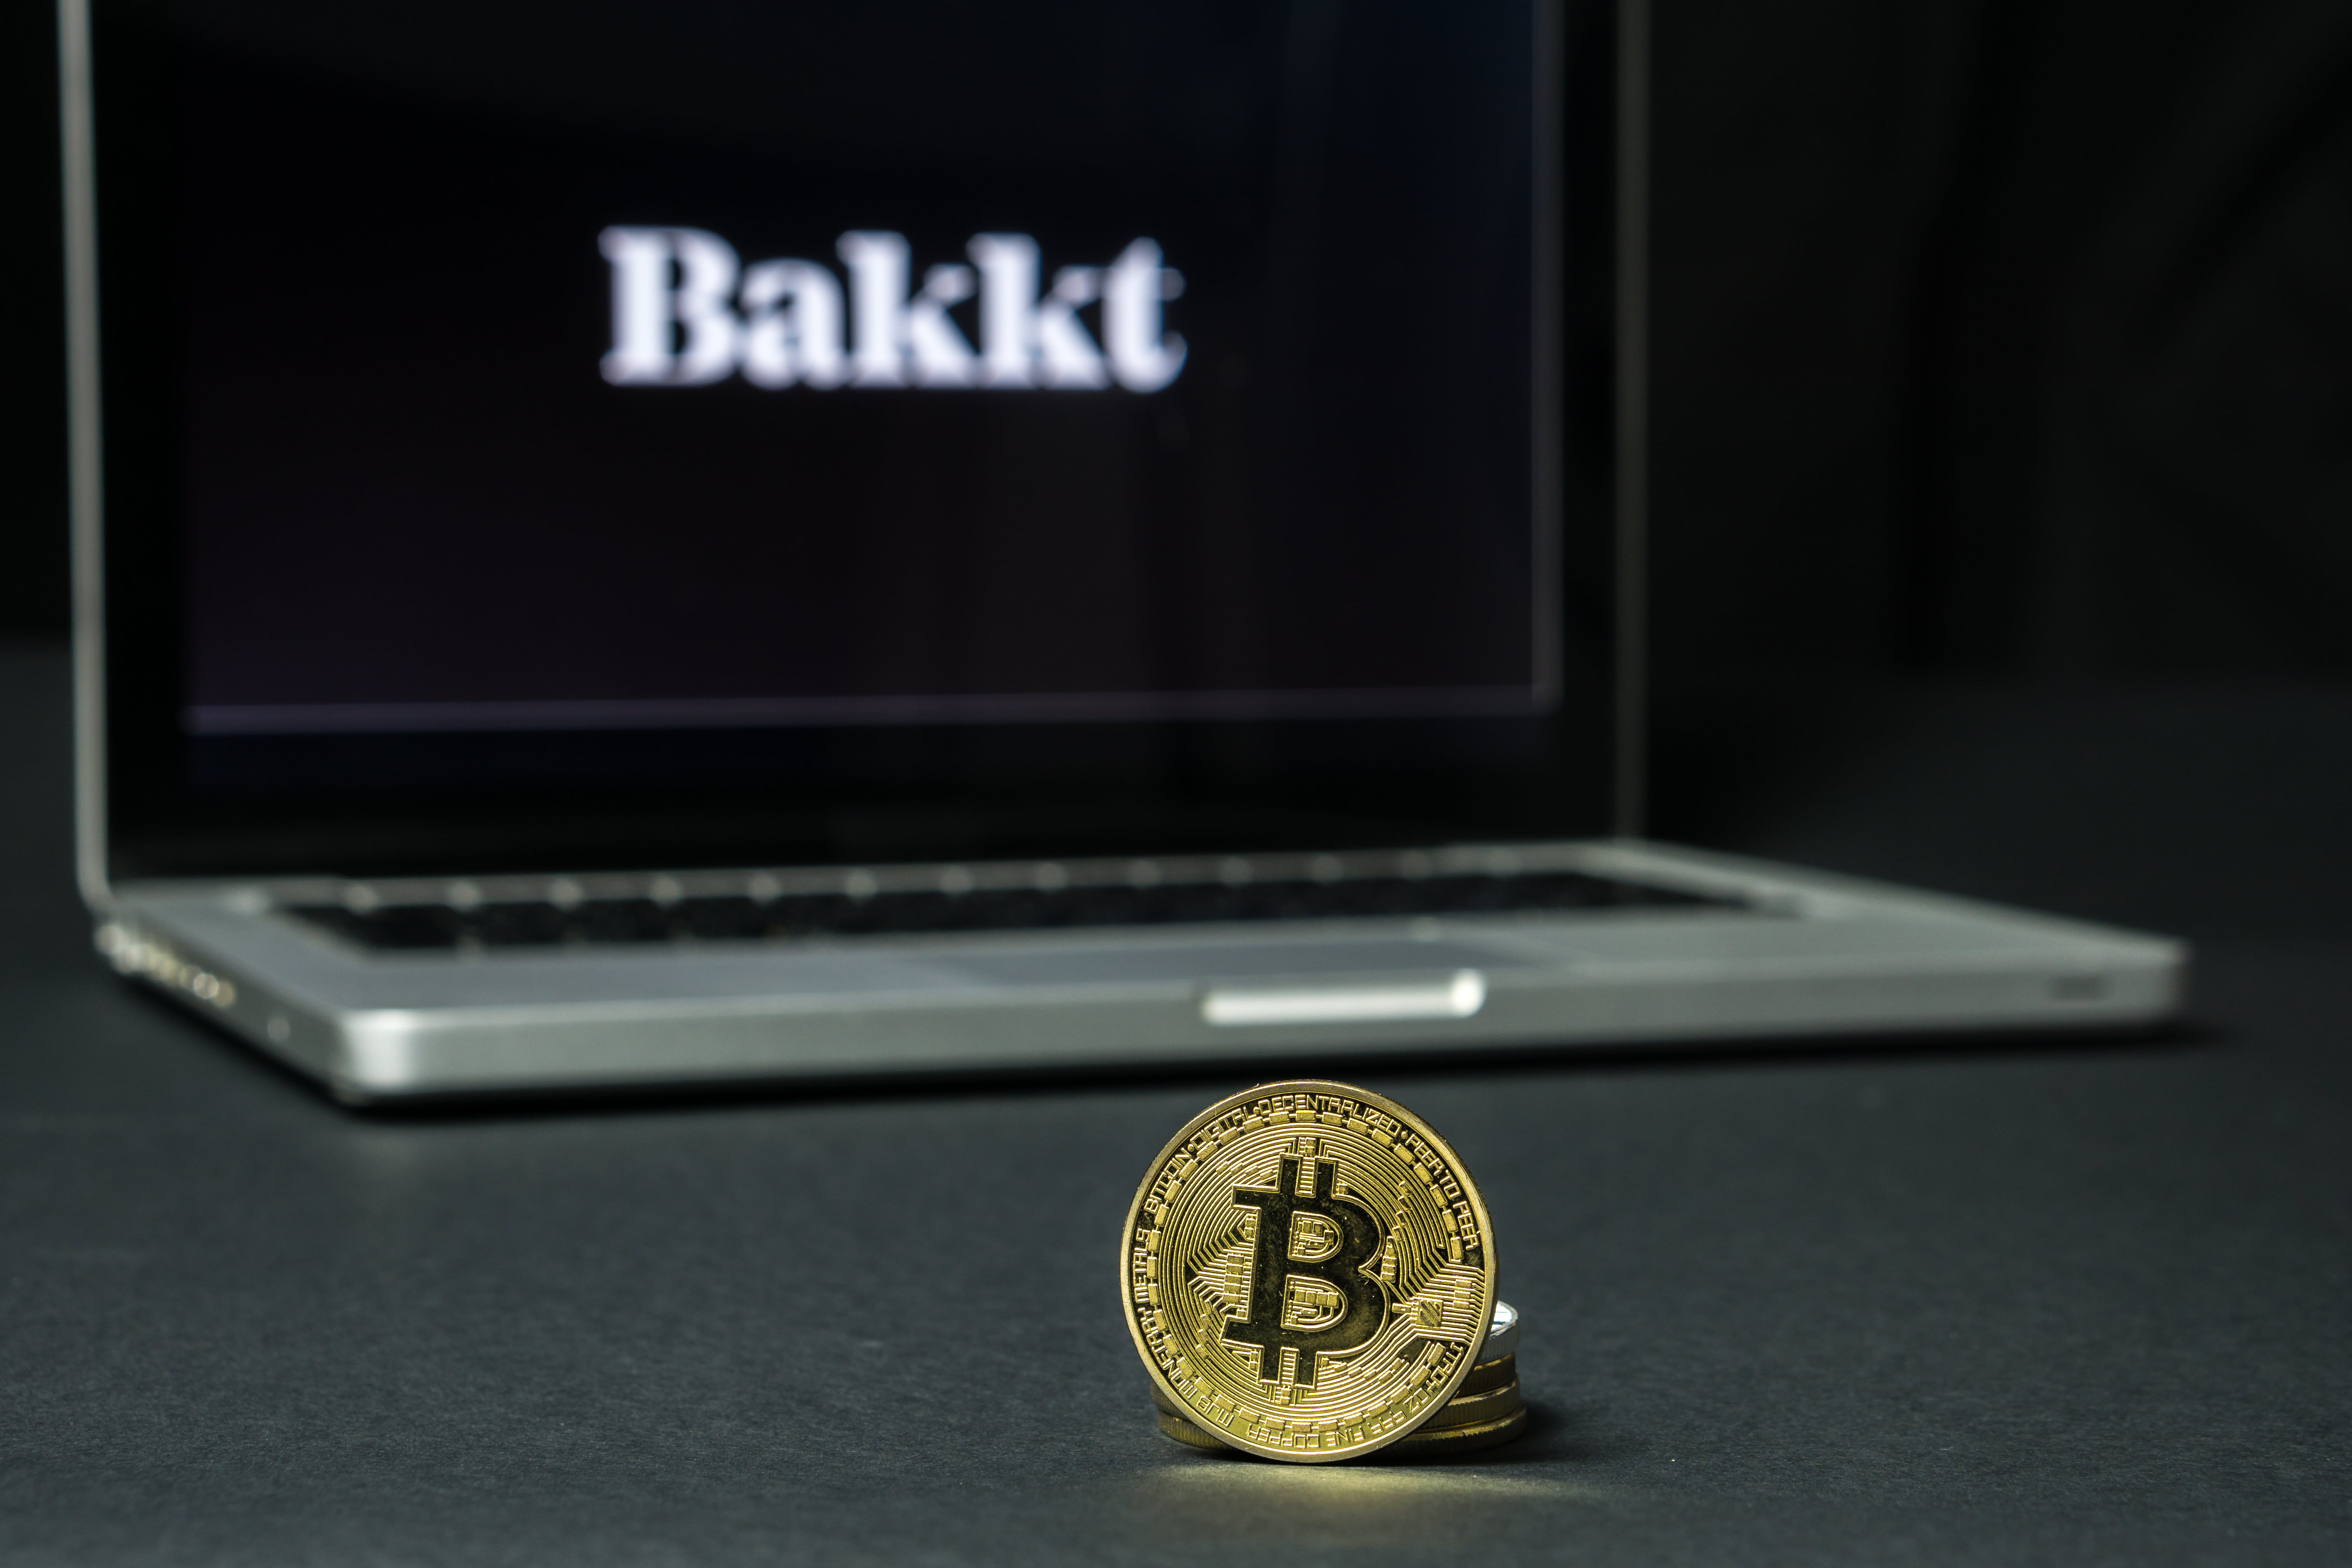 Bitcoin Price Spikes Nearly $500 in Minutes on Bakkt News